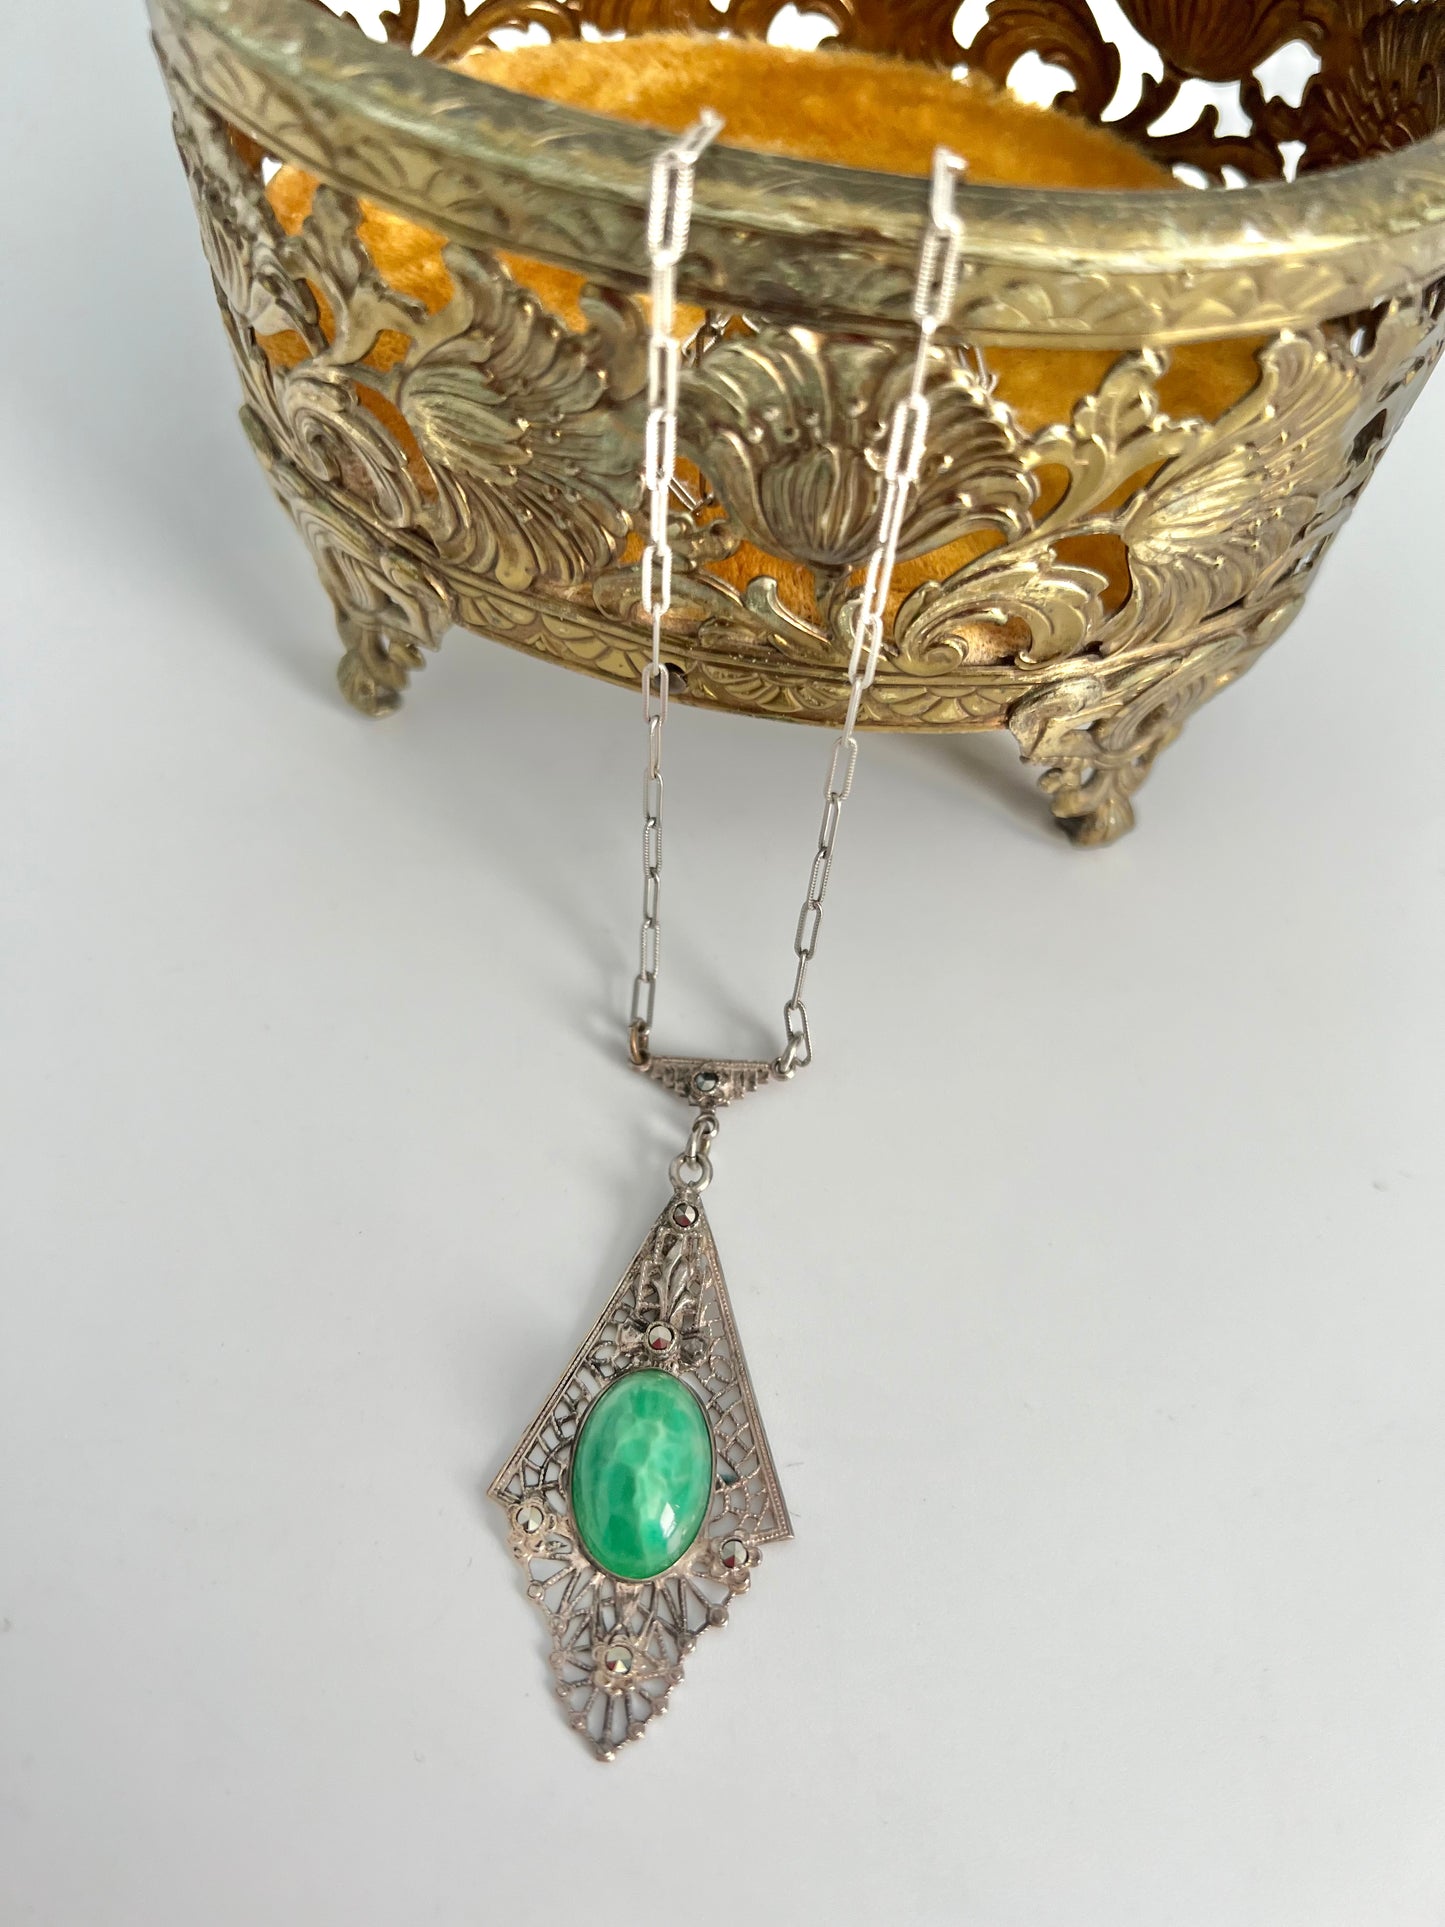 Vintage Art Deco Green Glass Marcasite Necklace